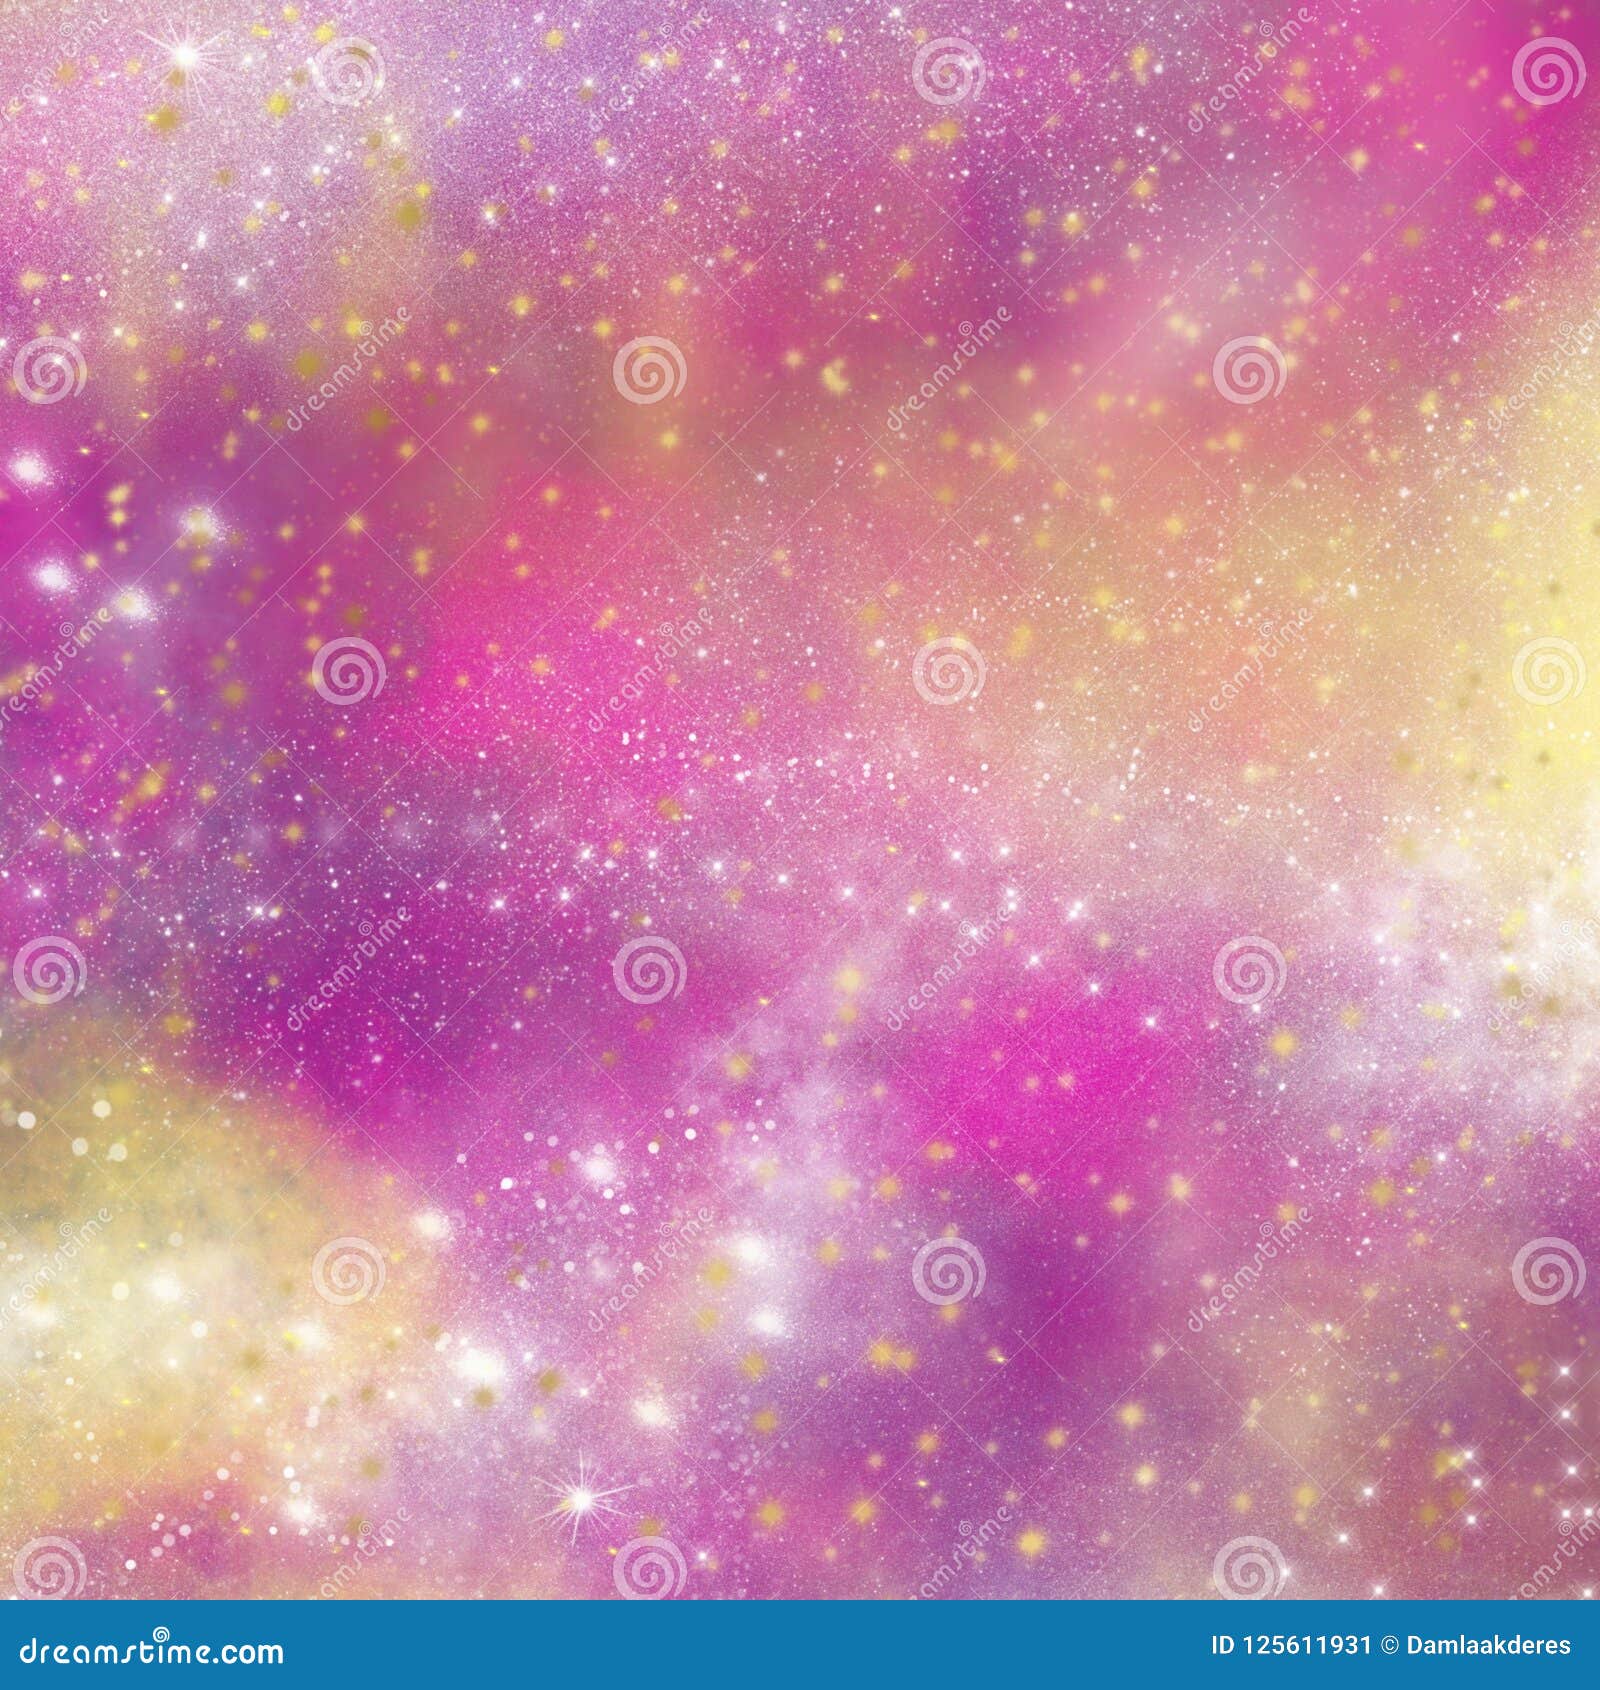 Pink Galaxy Background Wallpaper